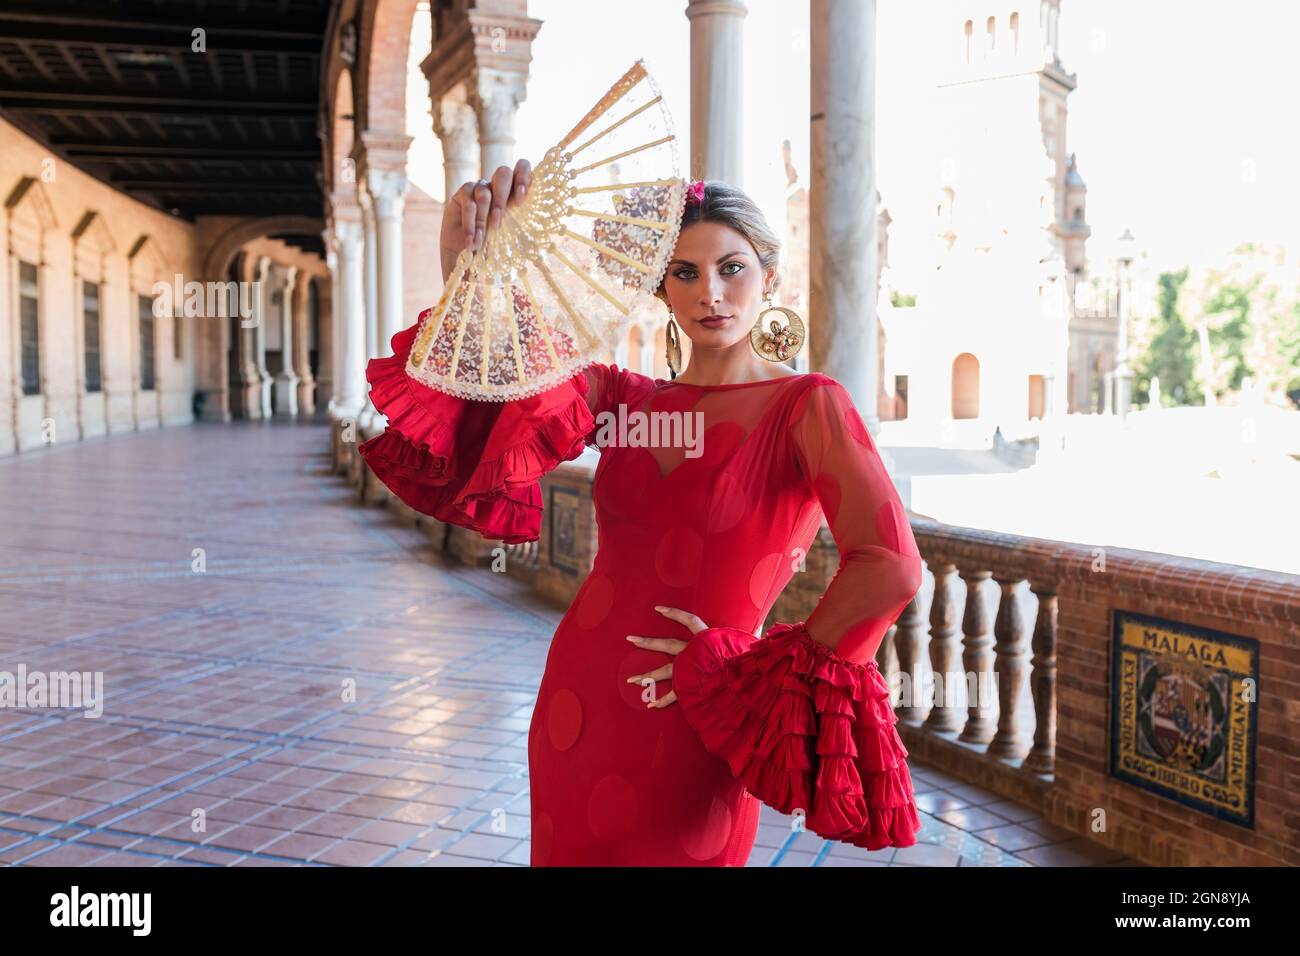 Woman wearing traditional dress holding hand fan at Plaza De Espana walkway in Seville, Spain Stock Photo